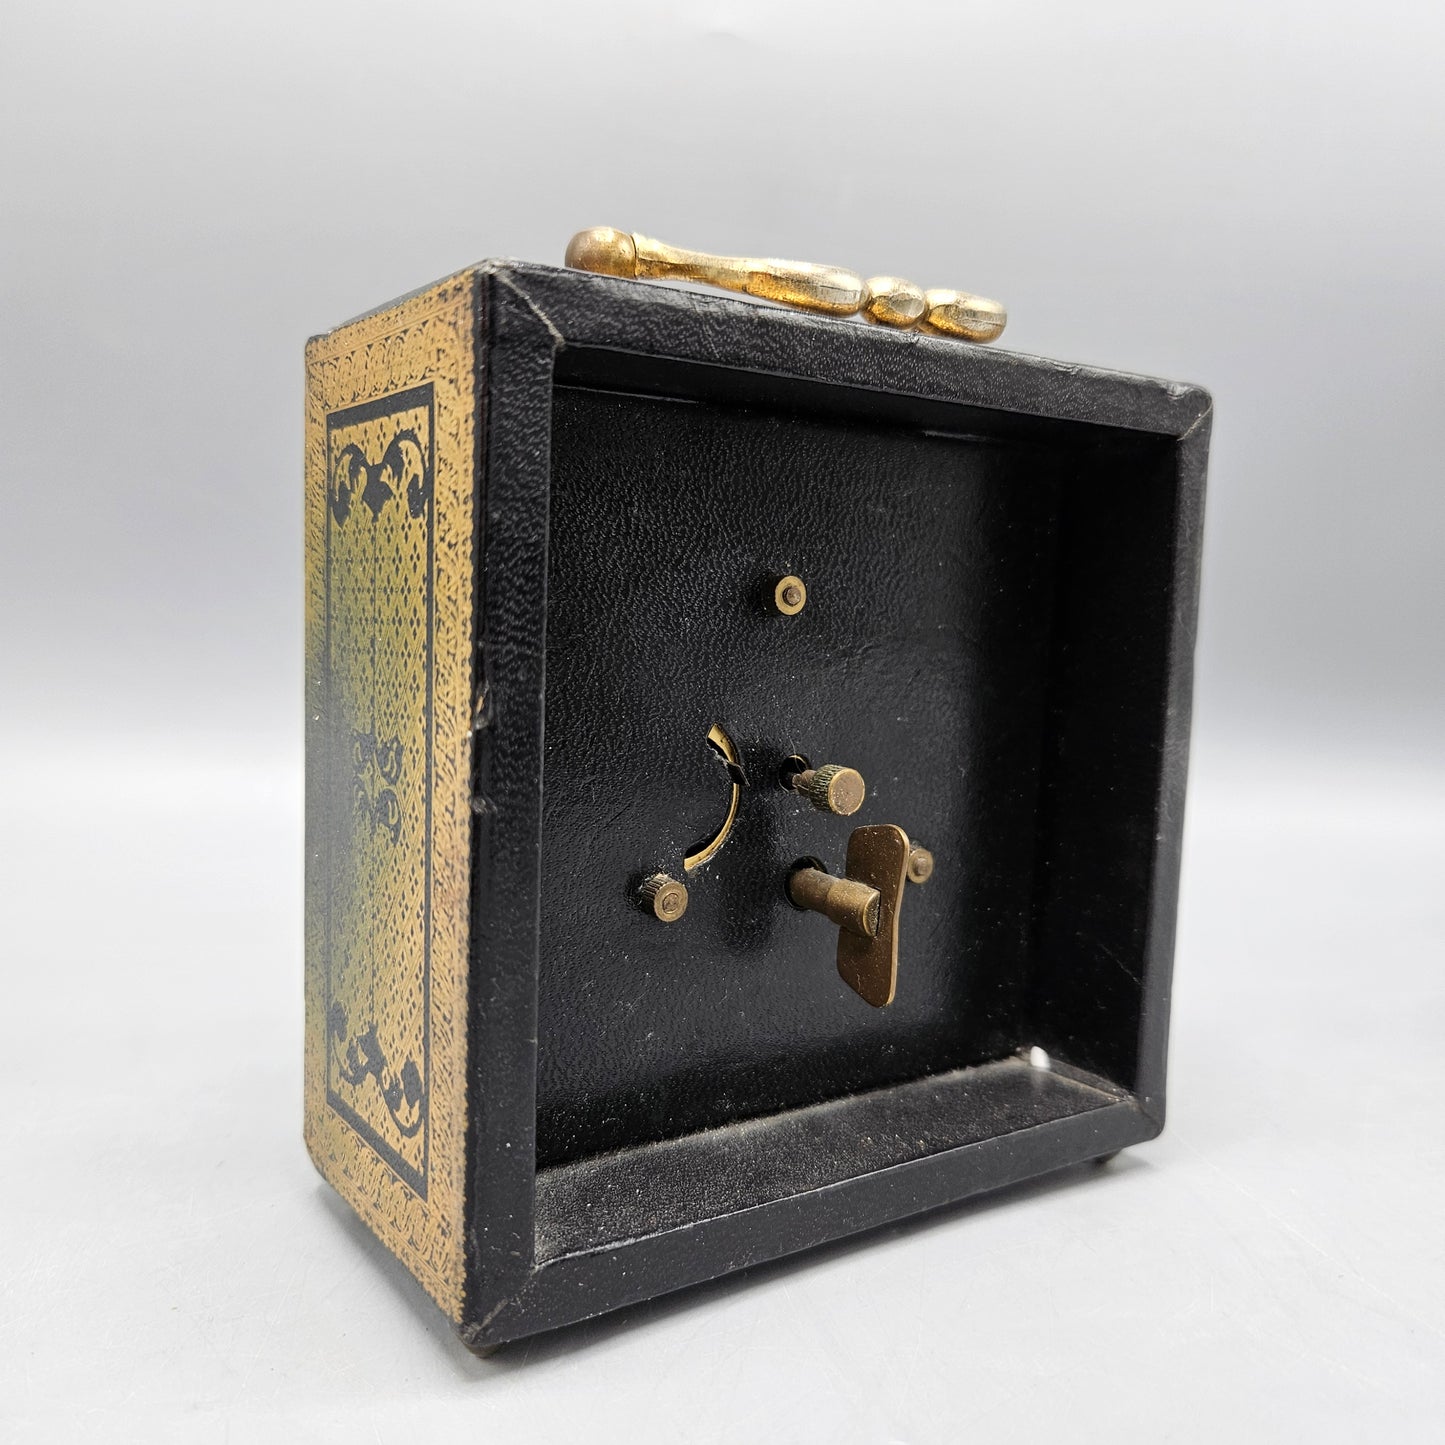 Vintage Mercede Design Philipp Skandetui Malmo Carriage Clock Made in Switzerland